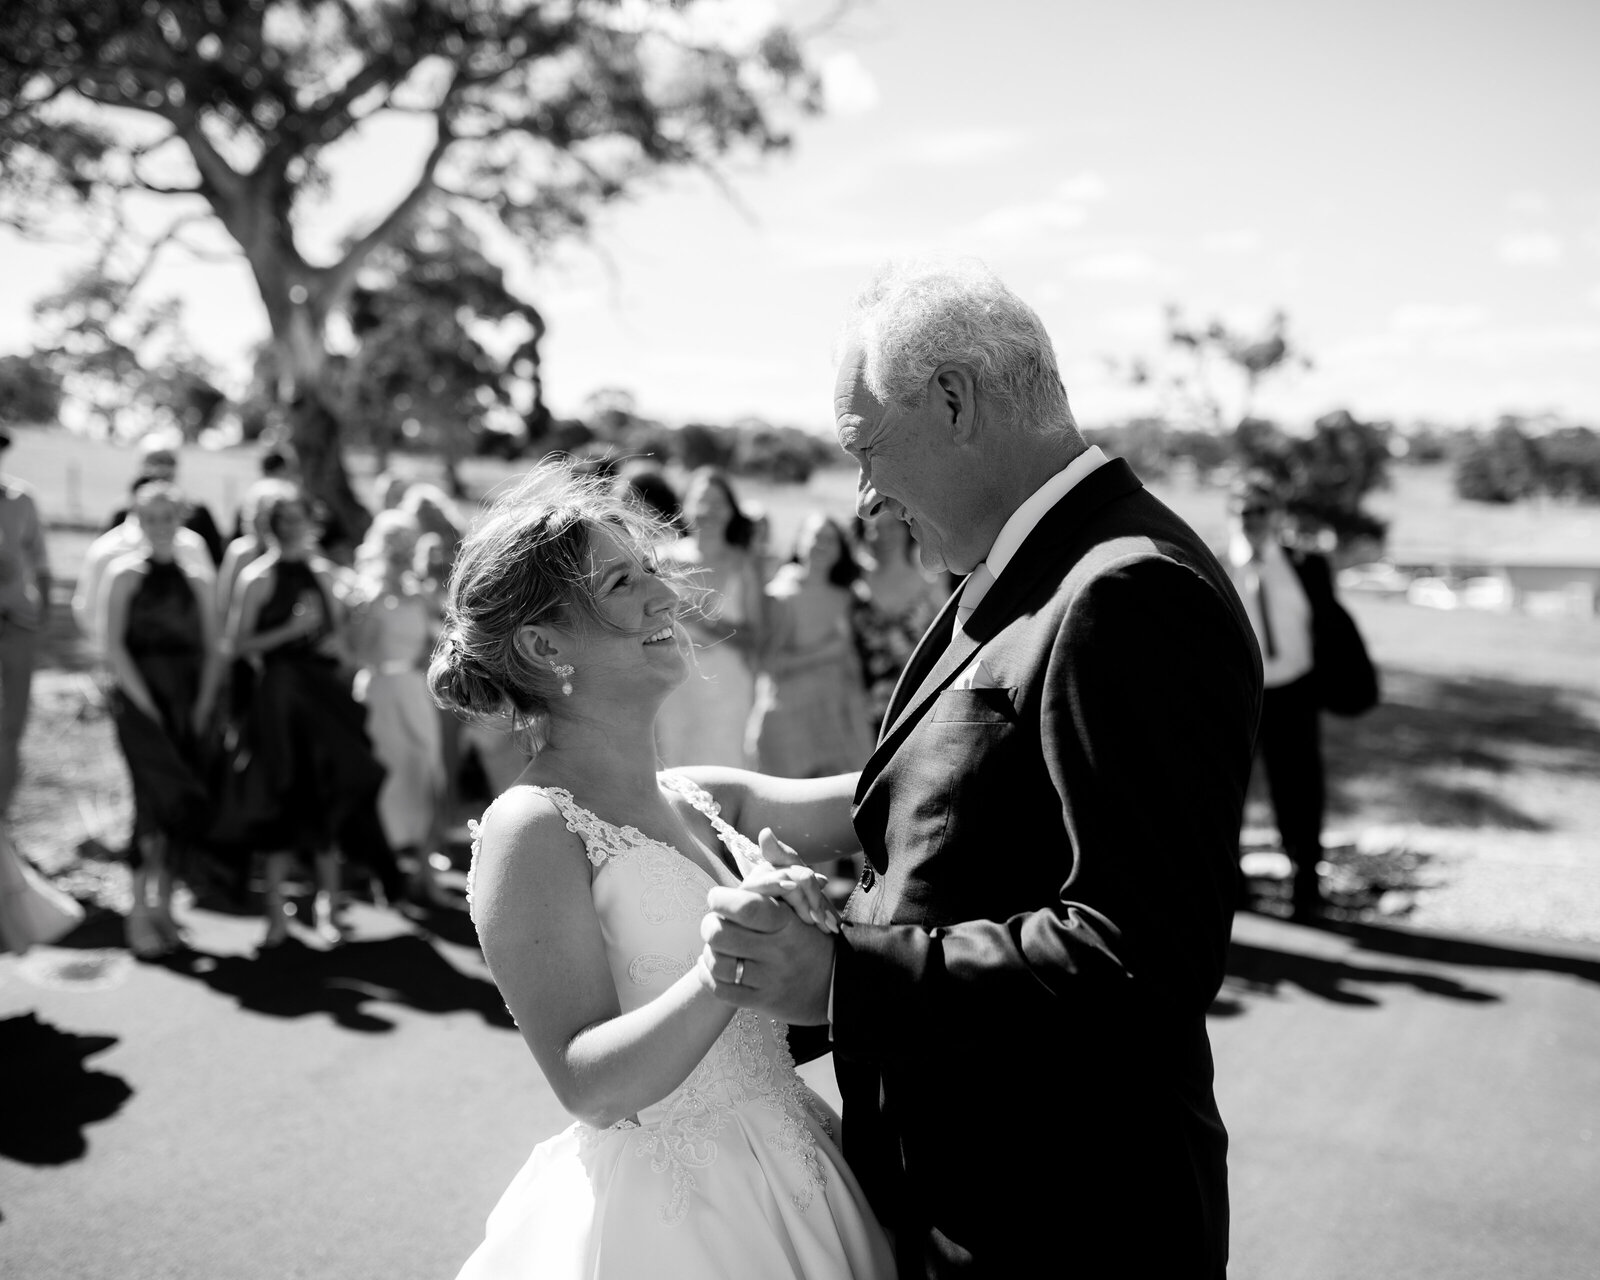 Rosie-Tom-Rexvil-Photography-Adelaide-Wedding-Photographer-602